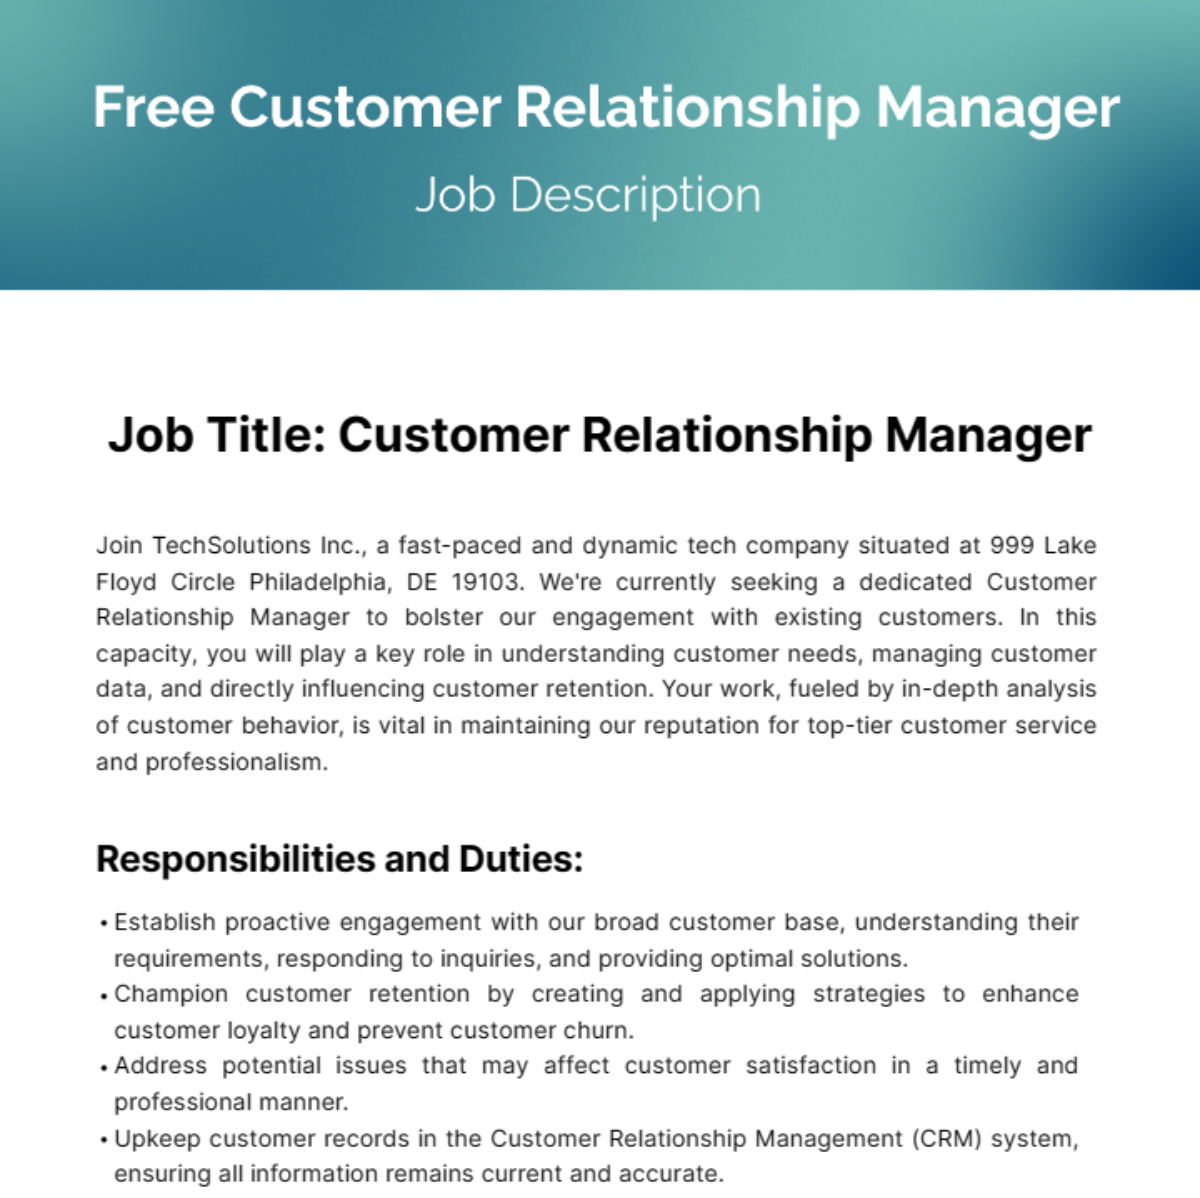 Free Customer Relationship Management Job Description Template